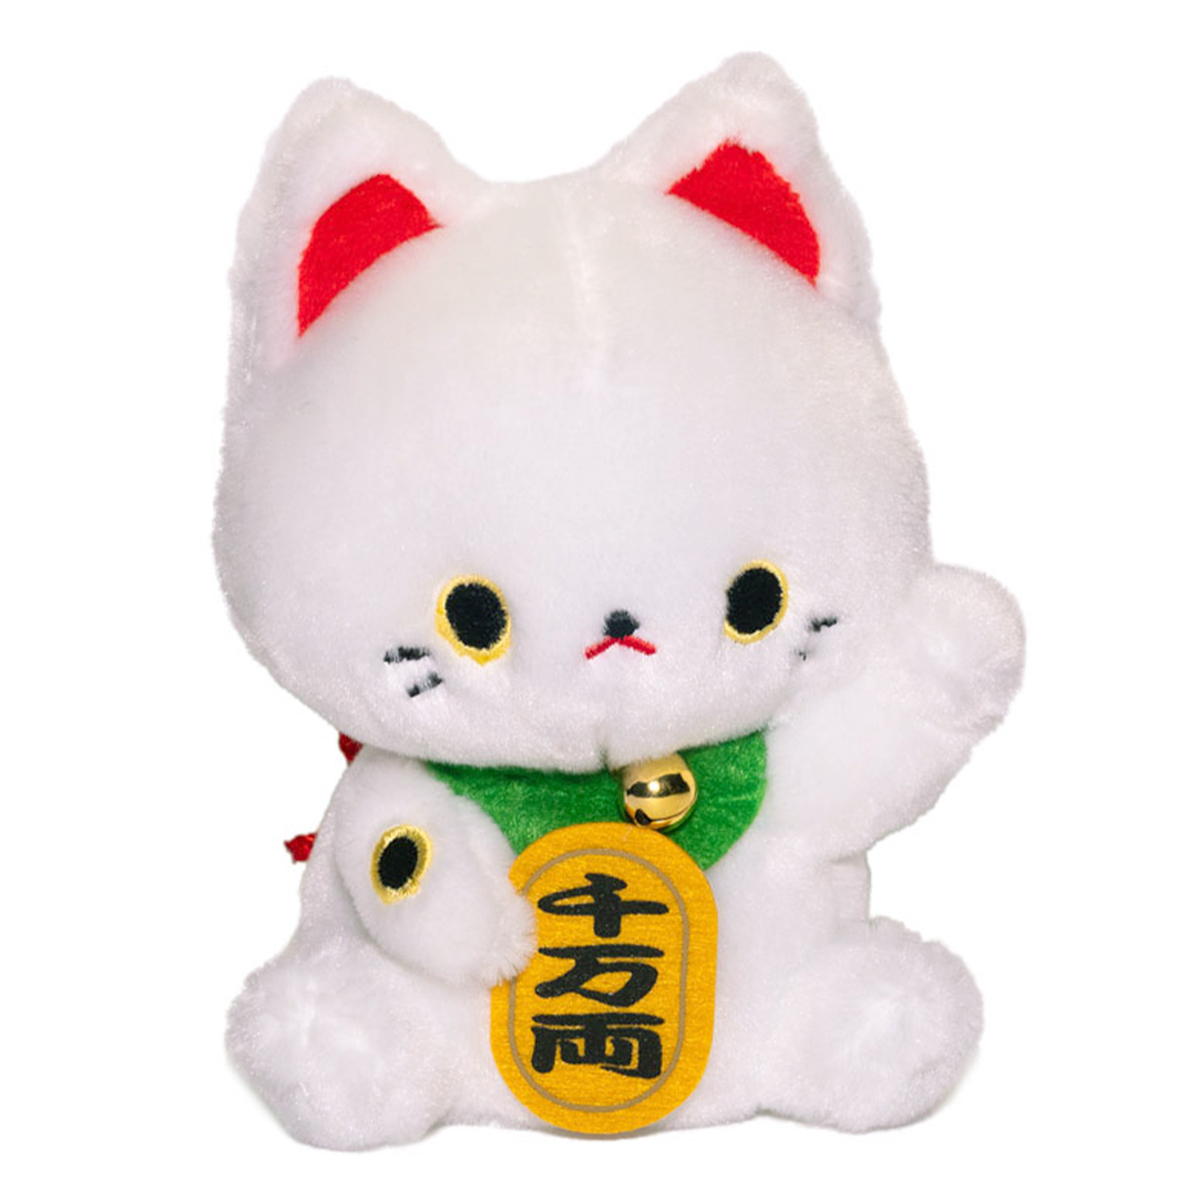 Details about   Siamese Neko Cat Plush Doll Super Soft Cute Stuffed Animal White Big Size 10" 